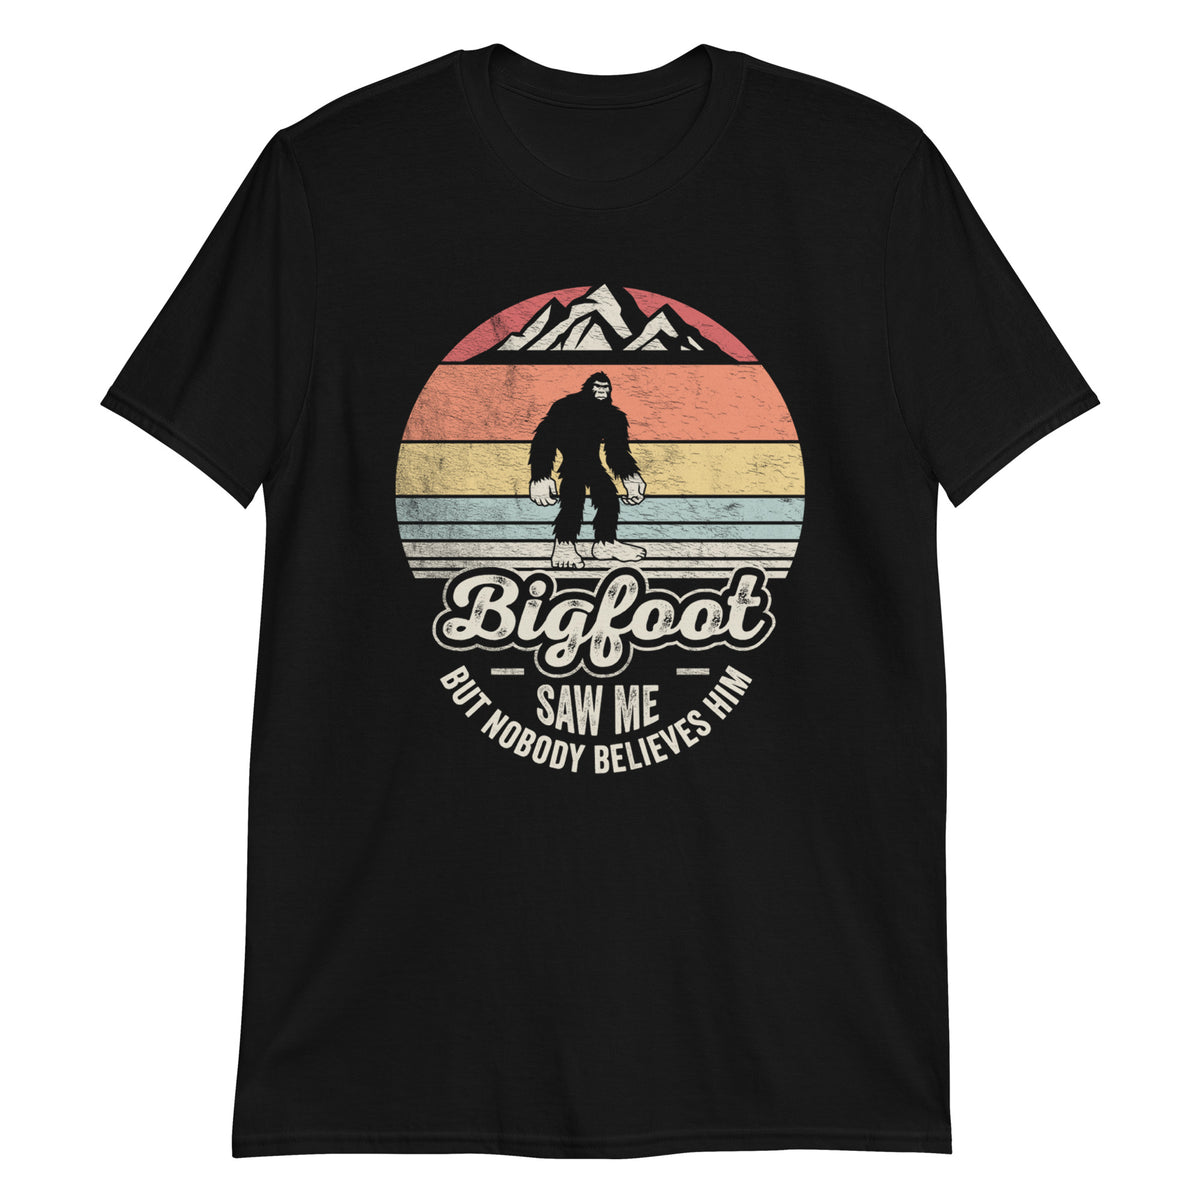 Bigfoot Saw Me But Nobody Believes Him Funny Vintage Bigfoot T-shirt